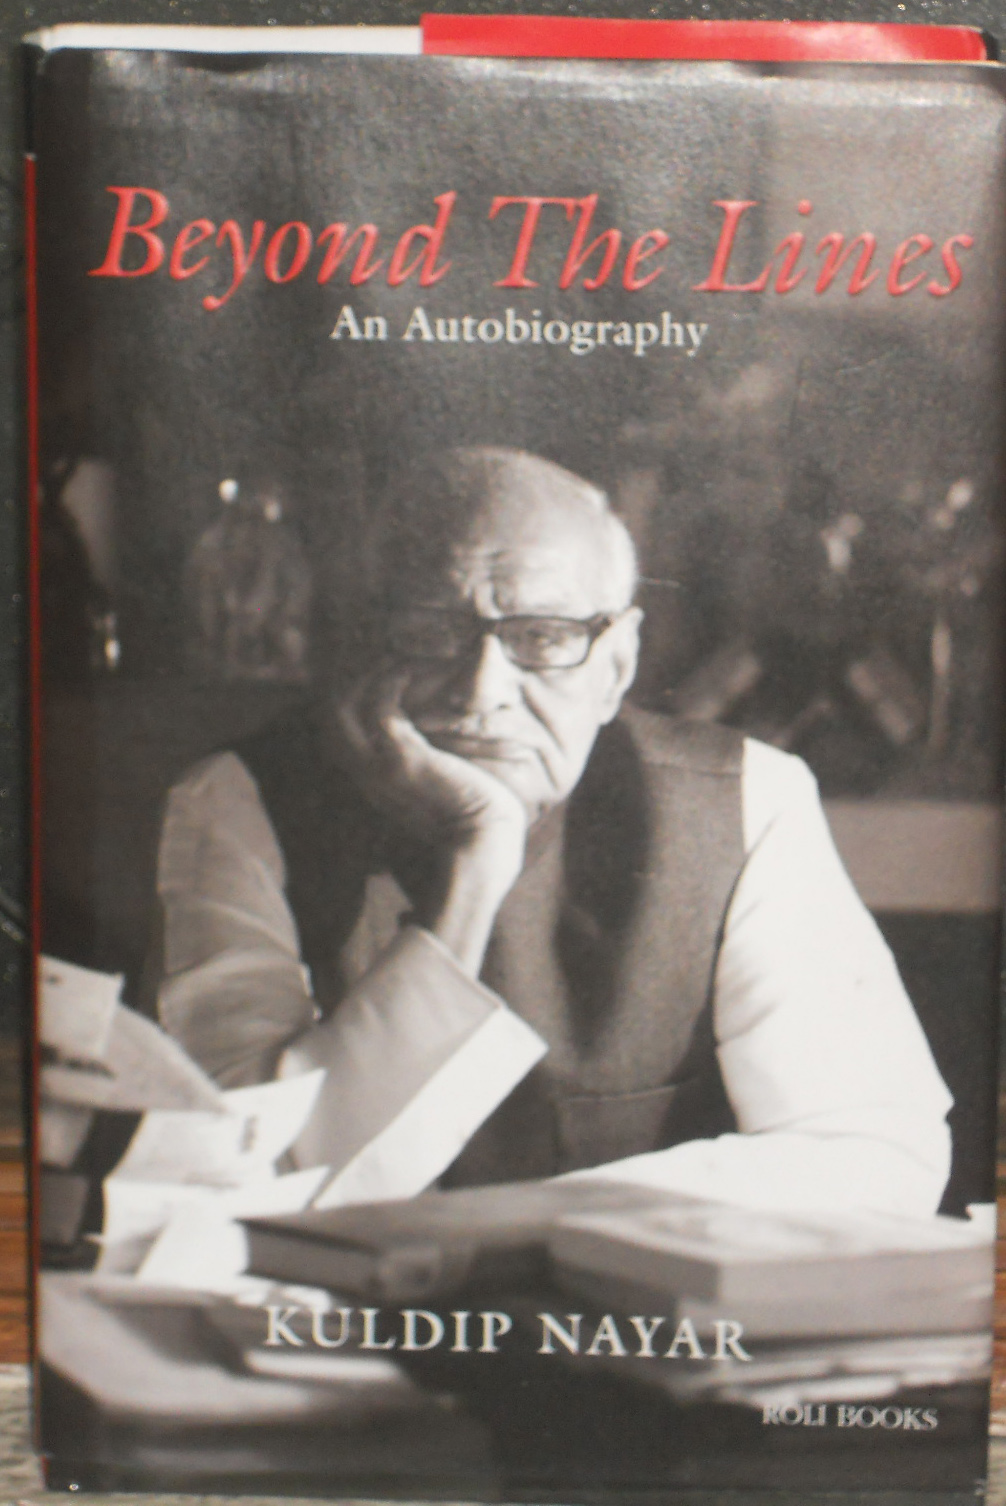 Between the Lines - autobiography of Journalist Kuldip Nayar